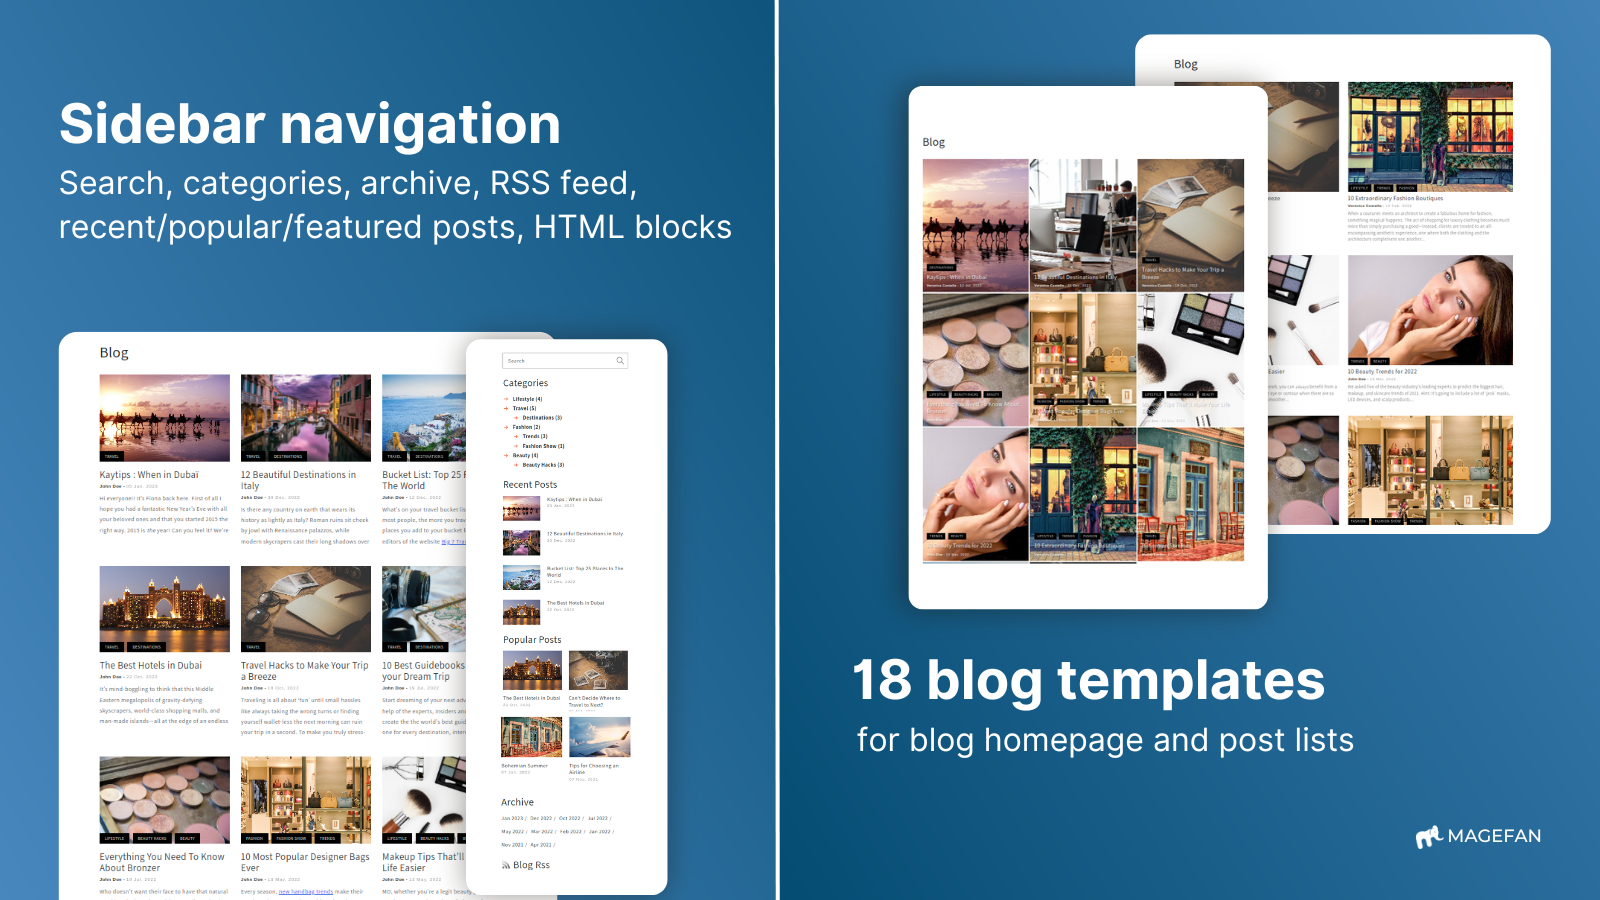 Blog navigation and templates